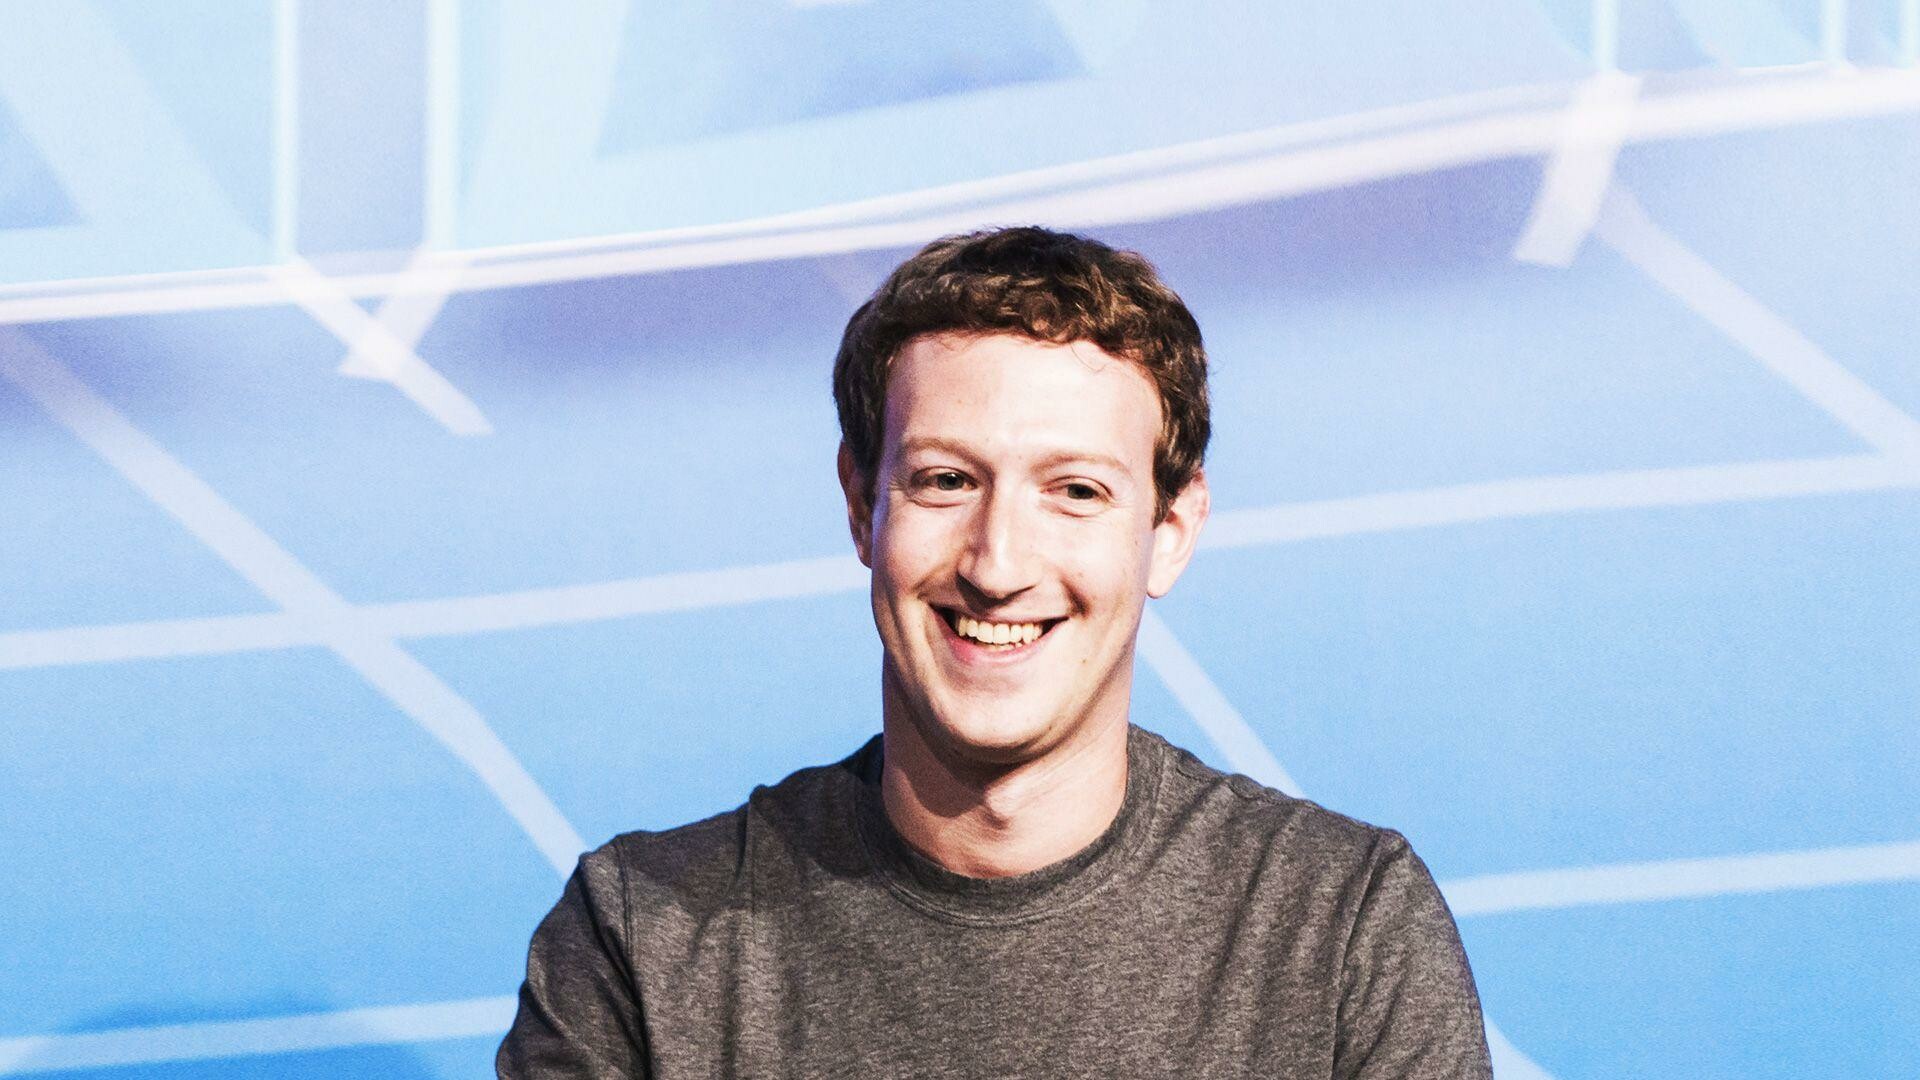 Mark Zuckerberg: The leader of the largest social media corporation in the world, Meta. 1920x1080 Full HD Wallpaper.